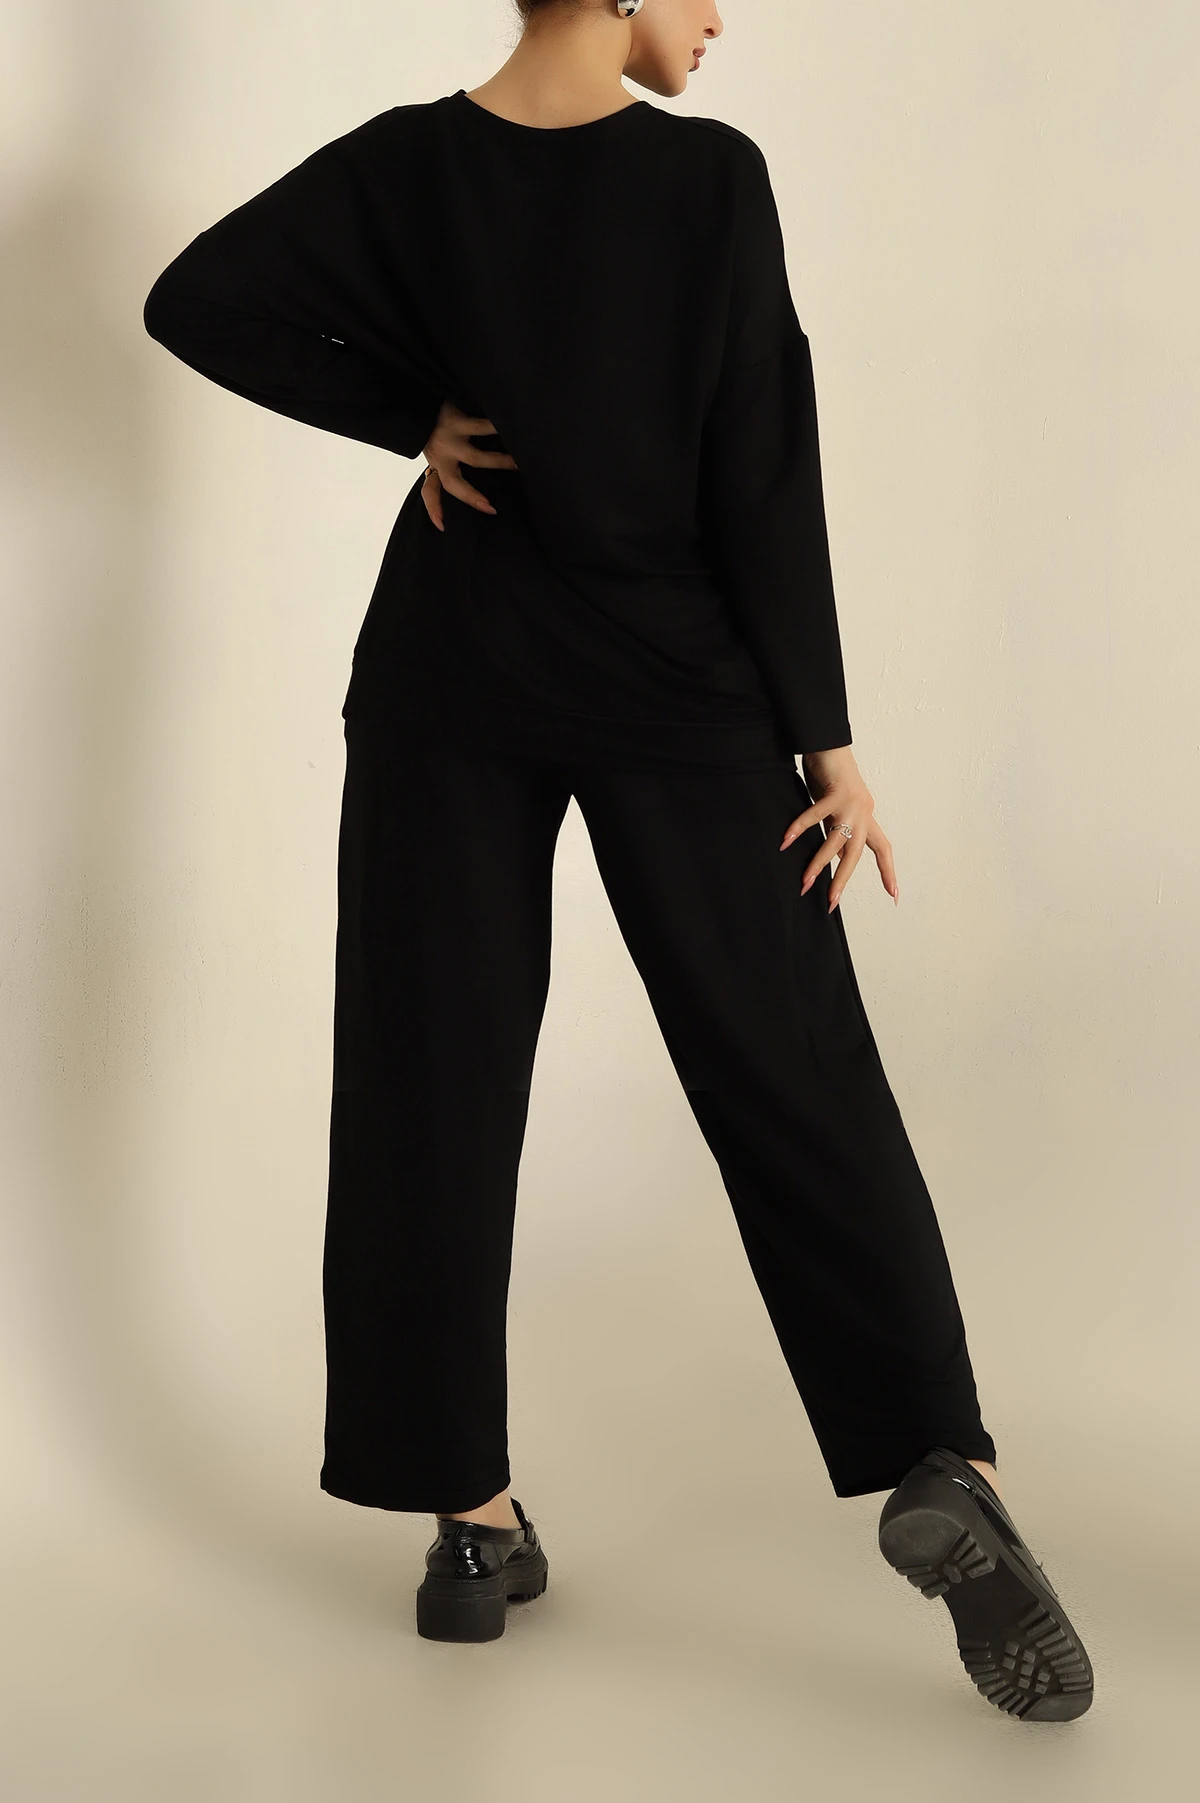 Siyah Modal Pantolonlu Bayan İkili Takım 255427